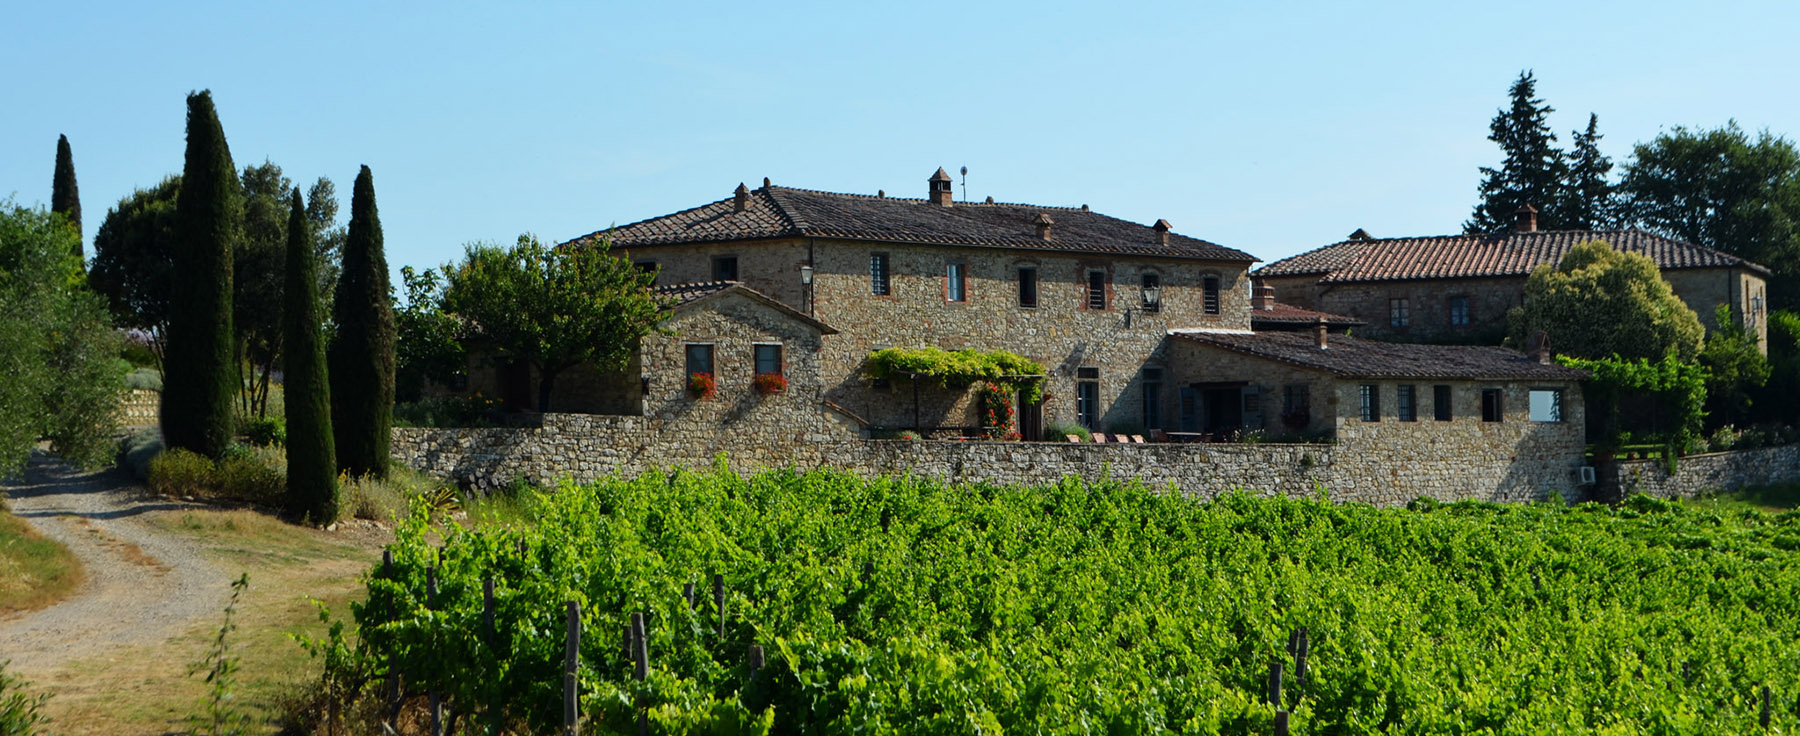 borgo argenina chianti hamlet view on vineyards